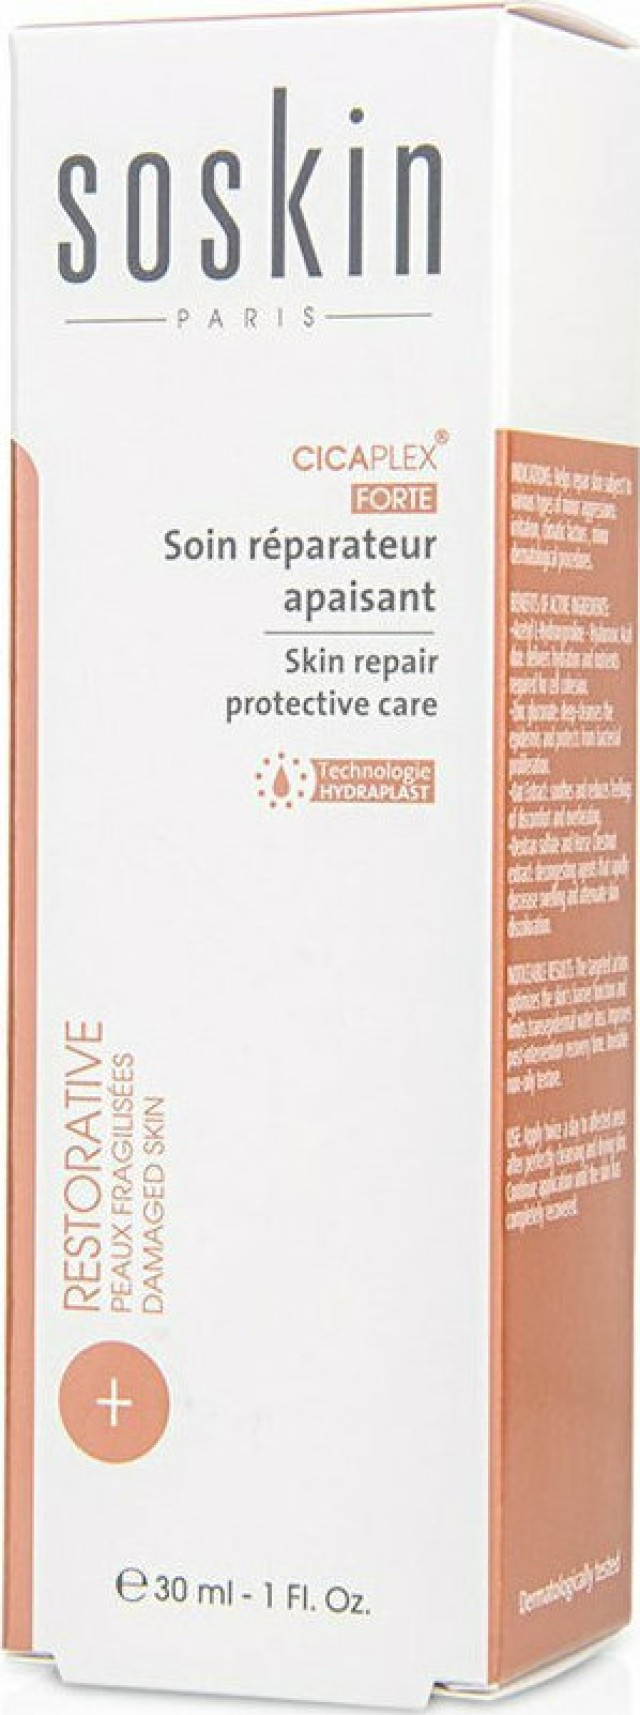 SOSKIN R+ Cicaplex Forte Κρέμα Προσώπου Για Επανορθωτική Περιποίηση & Προστασία Skin Repair Protective Care, 30ml